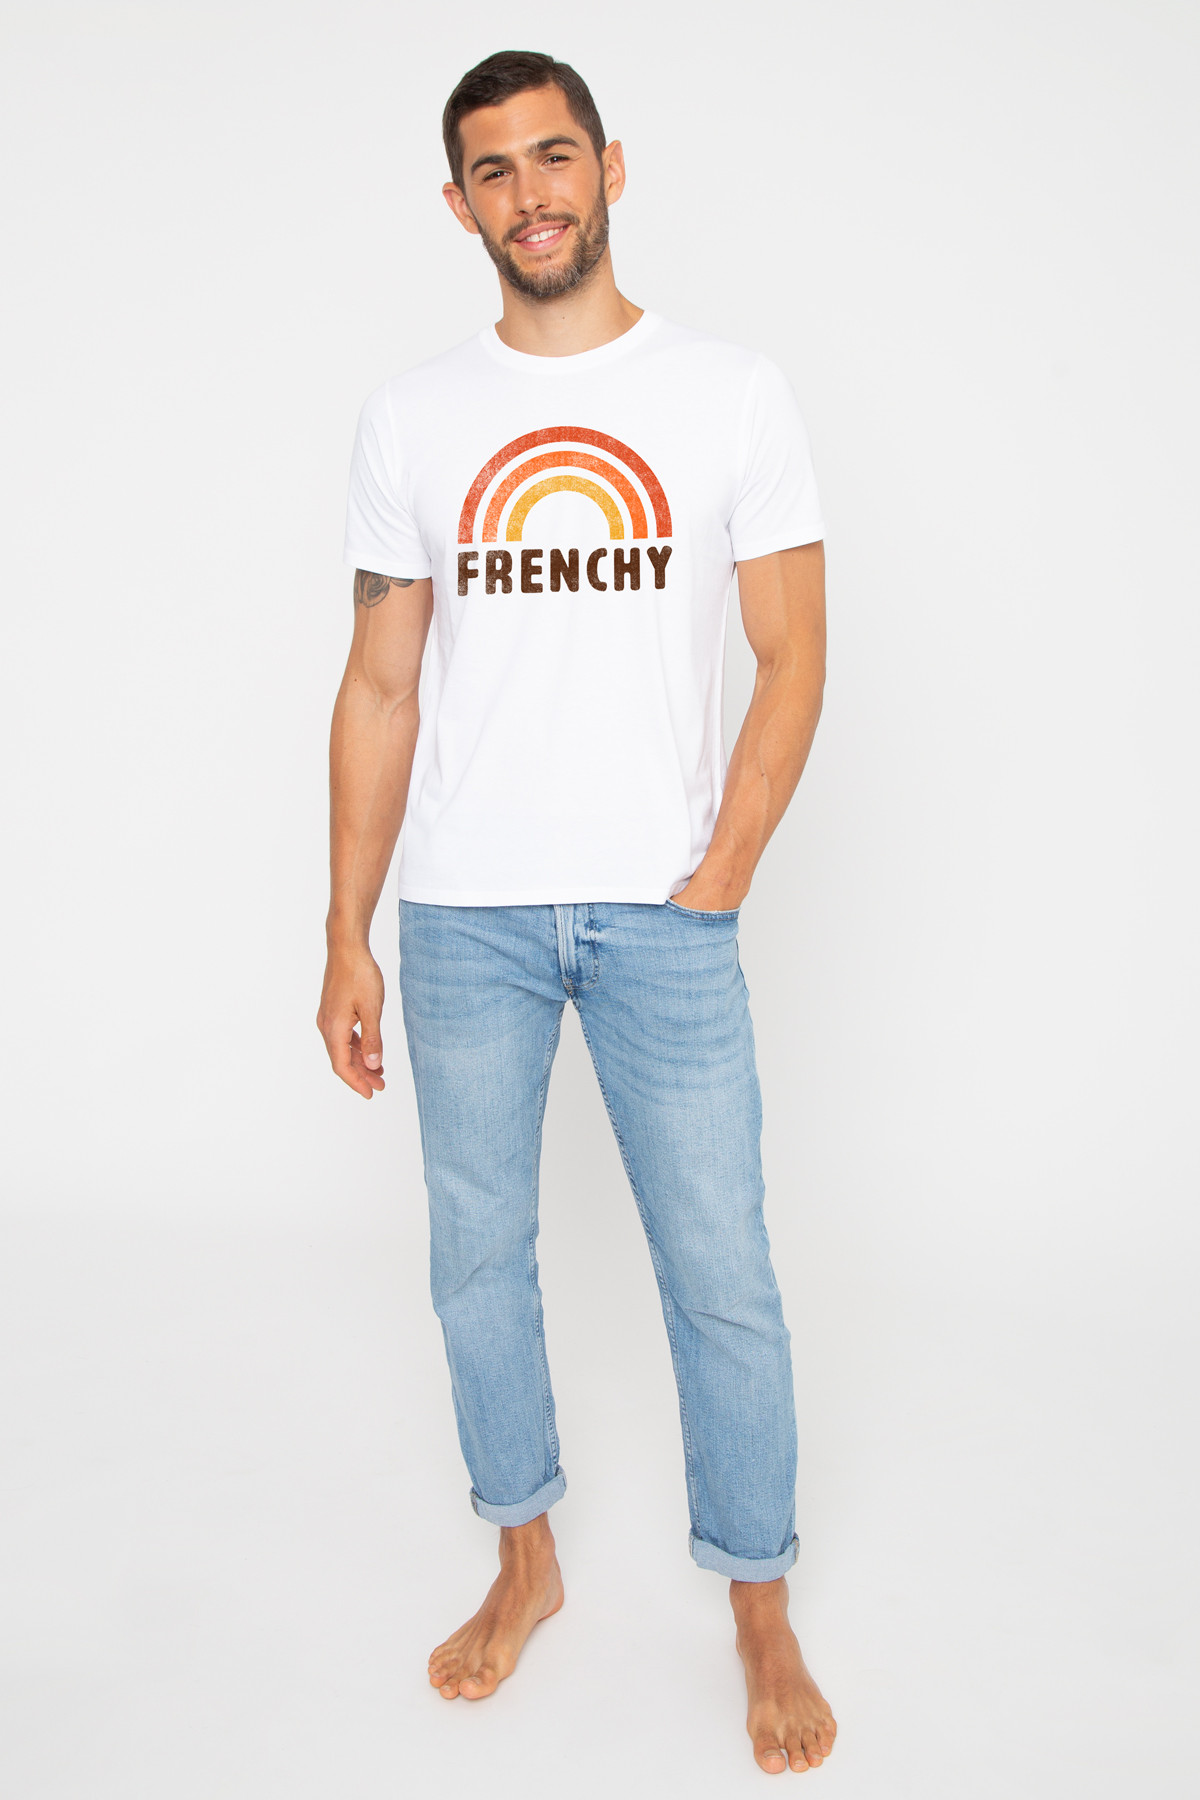 Tshirt FRENCHY VINTAGE French Disorder